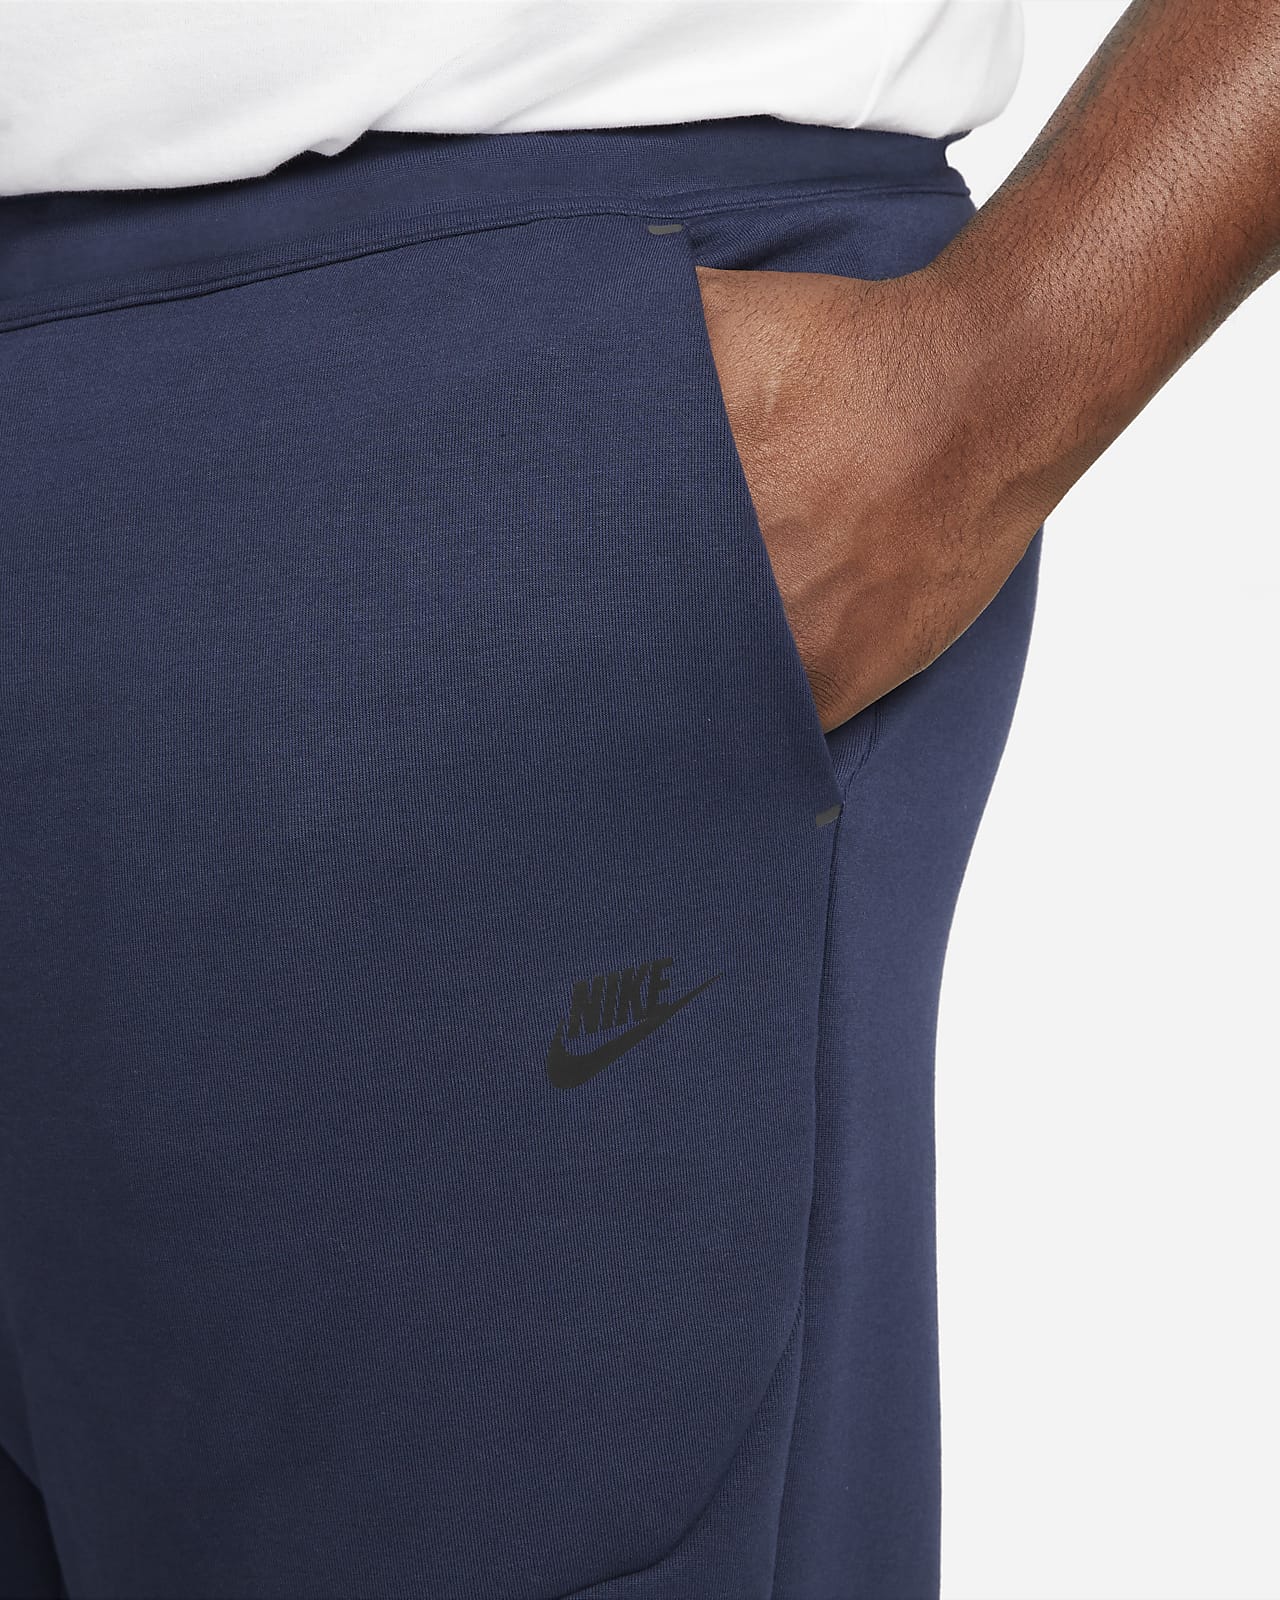 Nike Sportswear Tech Fleece Joggers Deep Royal Blue/White Men's - US